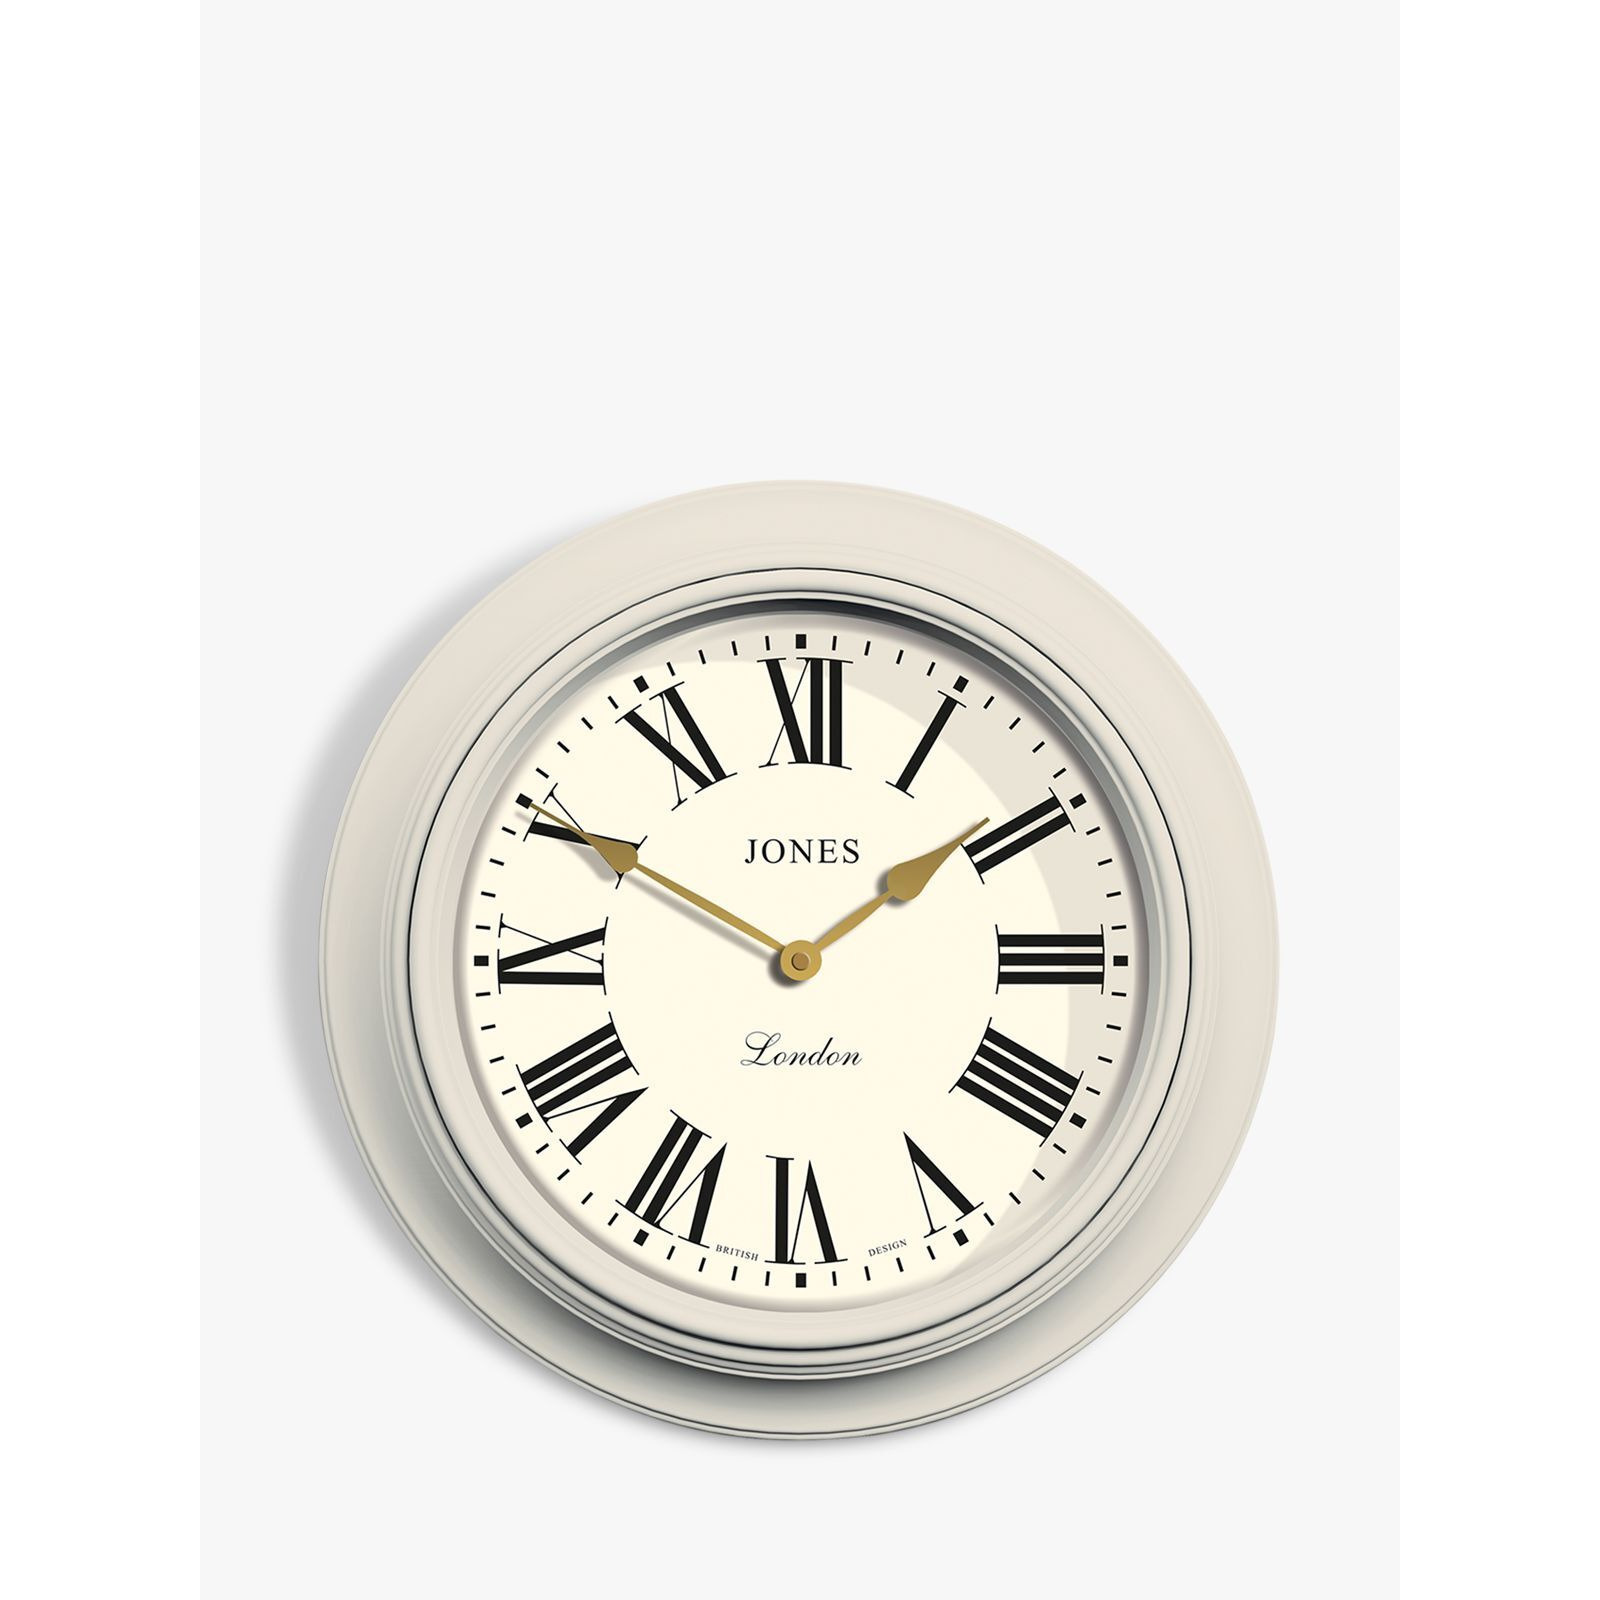 Jones Clocks Supper Club Roman Numeral Analogue Wall Clock, 40.5cm, Cream - image 1